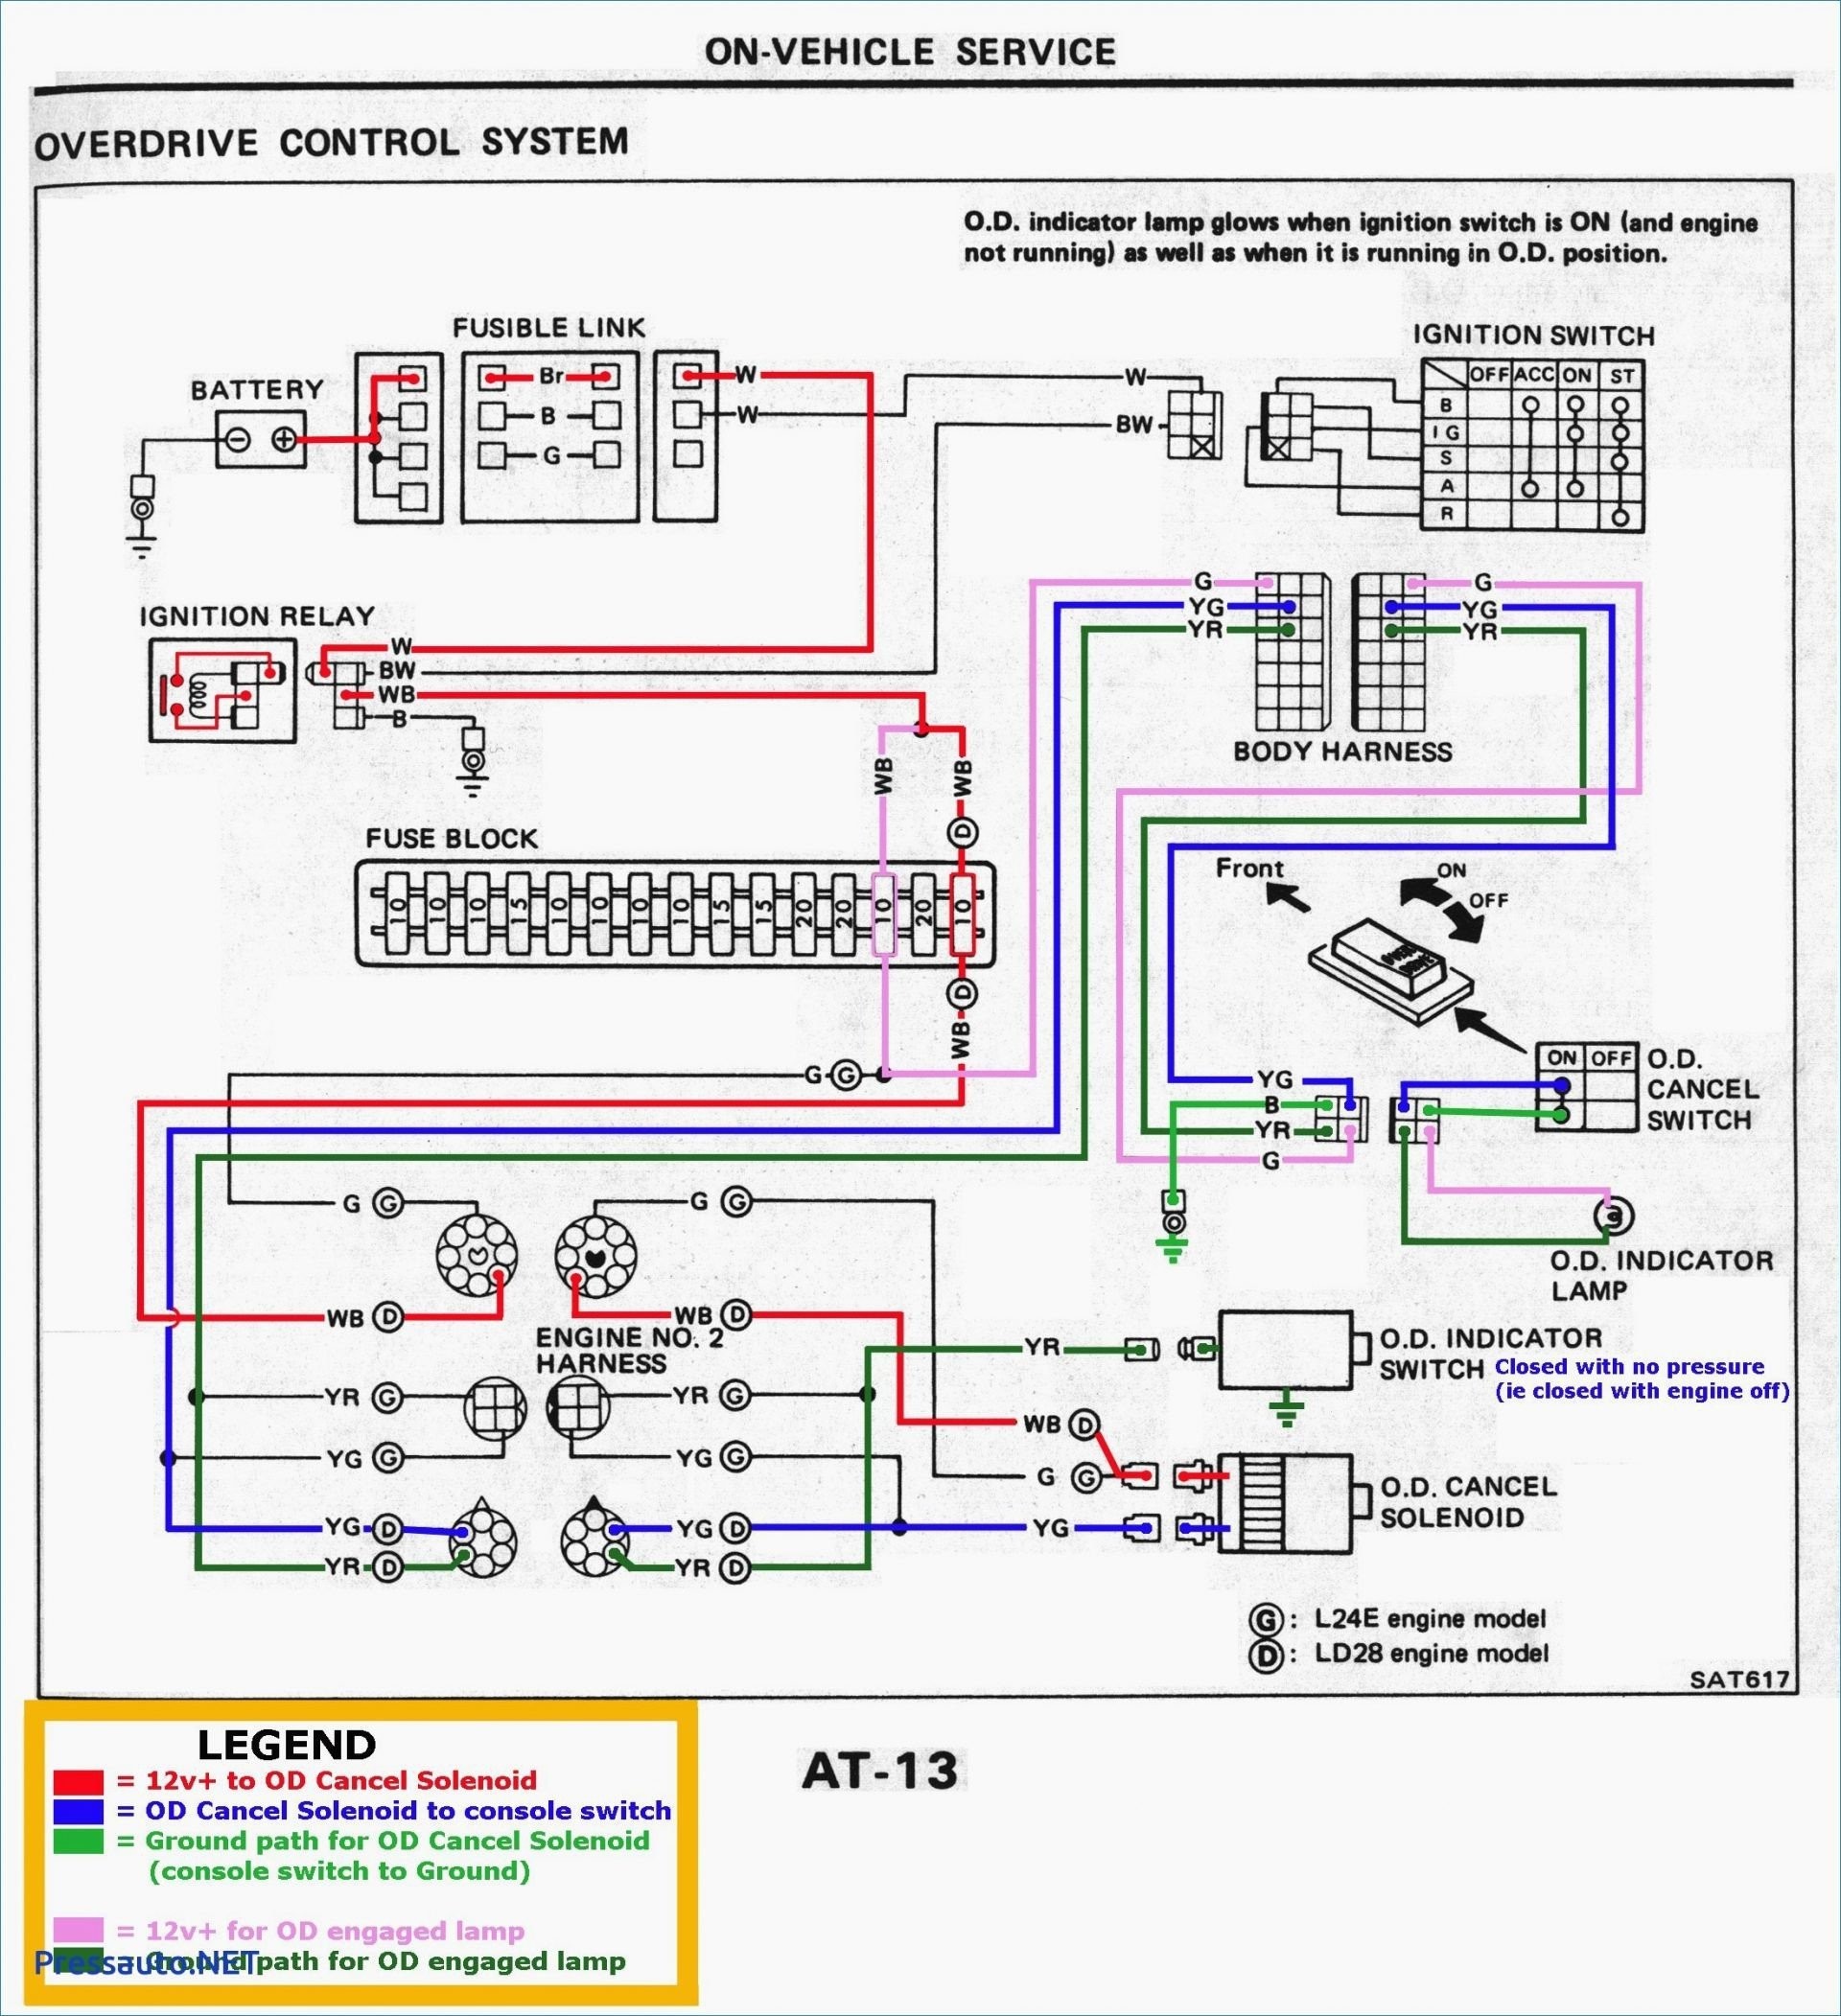 1985 toyota Pickup Wiring Diagram New toyota Alarm Wiring Diagram Refrence 1988 toyota Pickup Engine